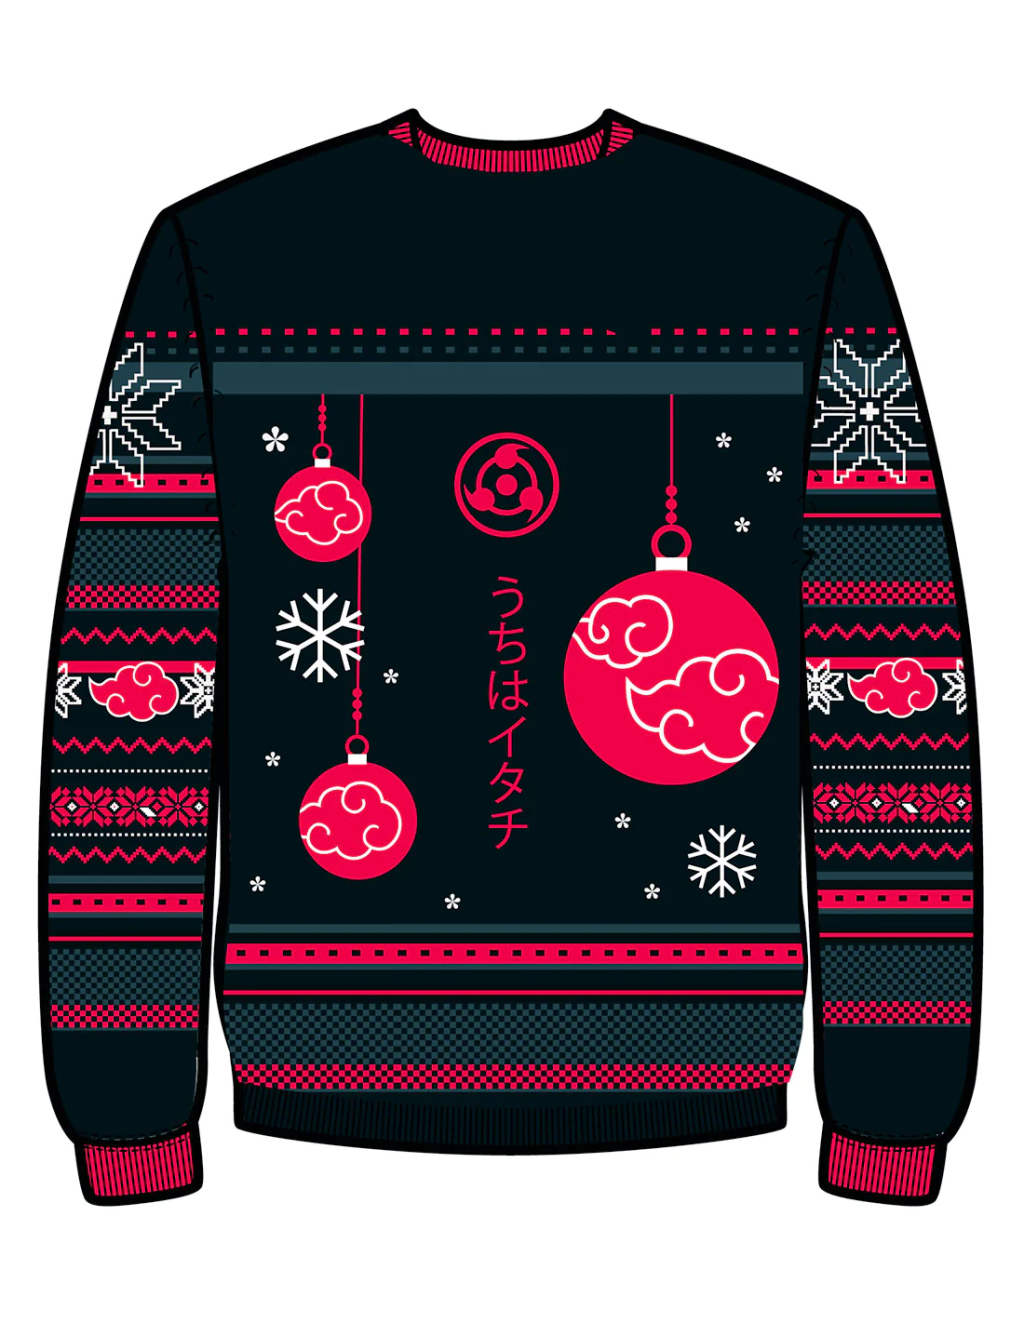 NARUTO - Itachi - Men Christmas Sweaters (L)